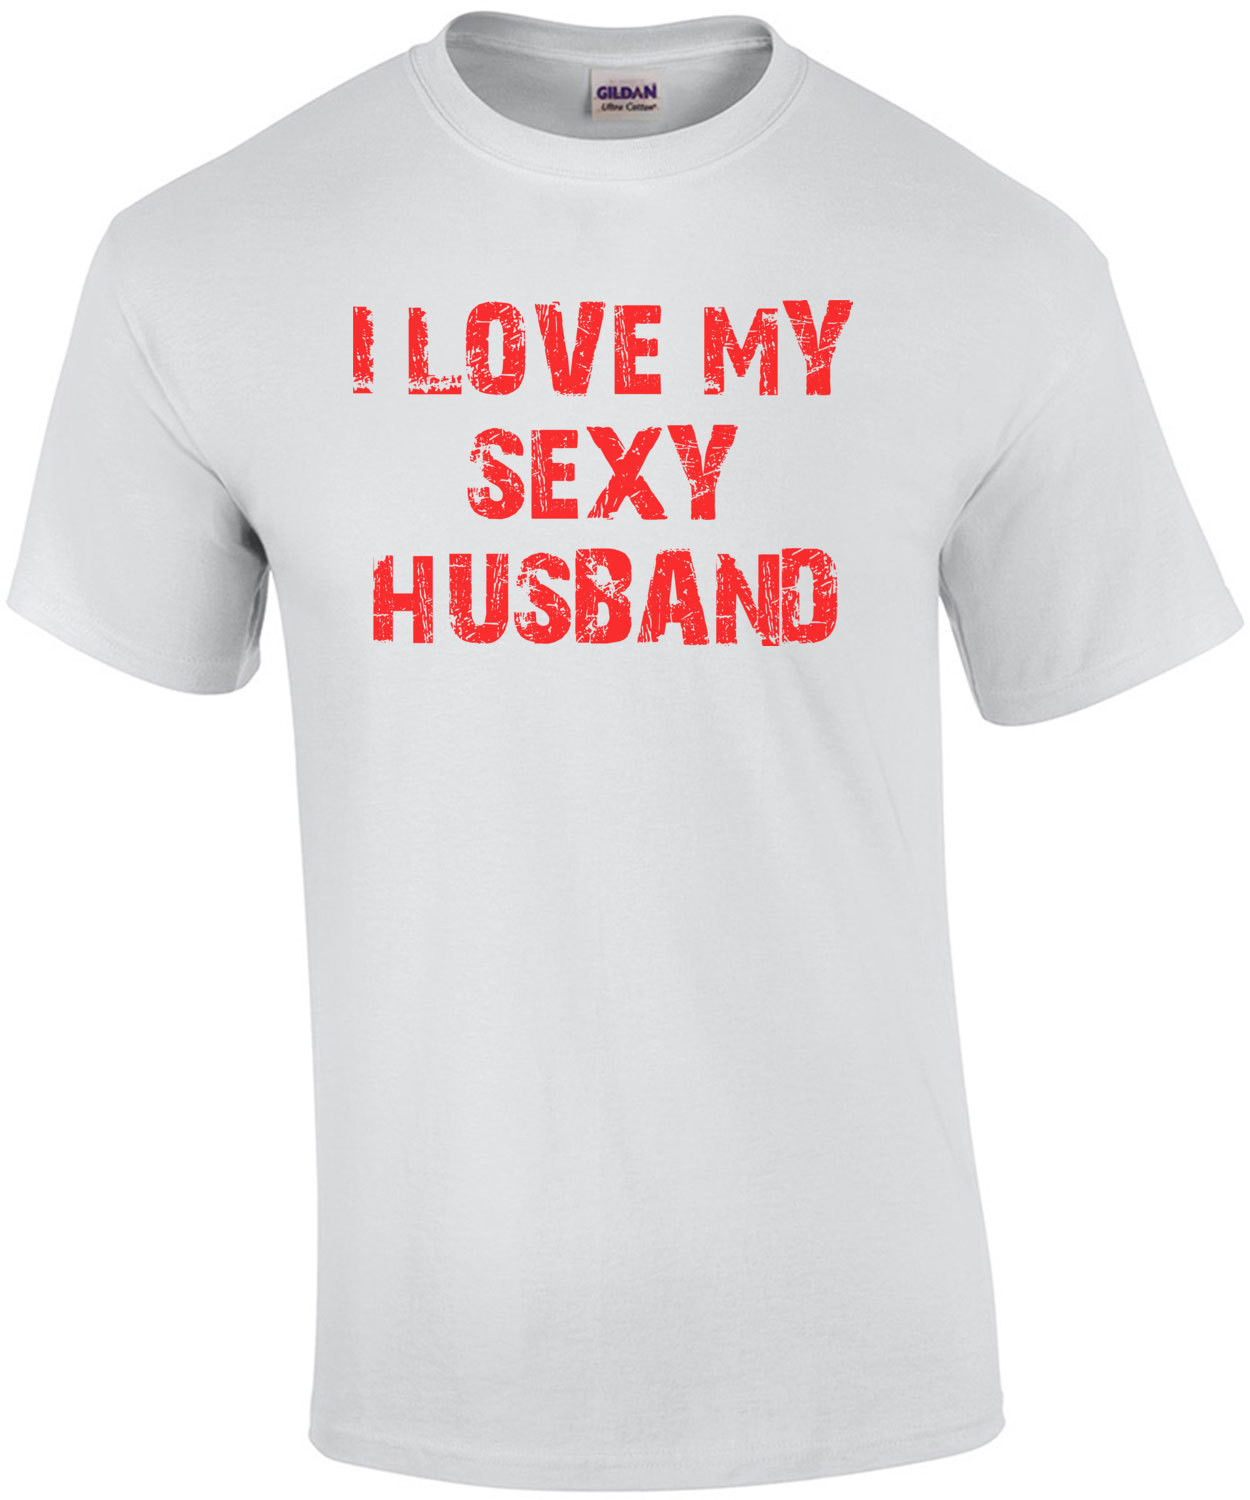 I LOVE MY SEXY HUSBAND T-Shirt